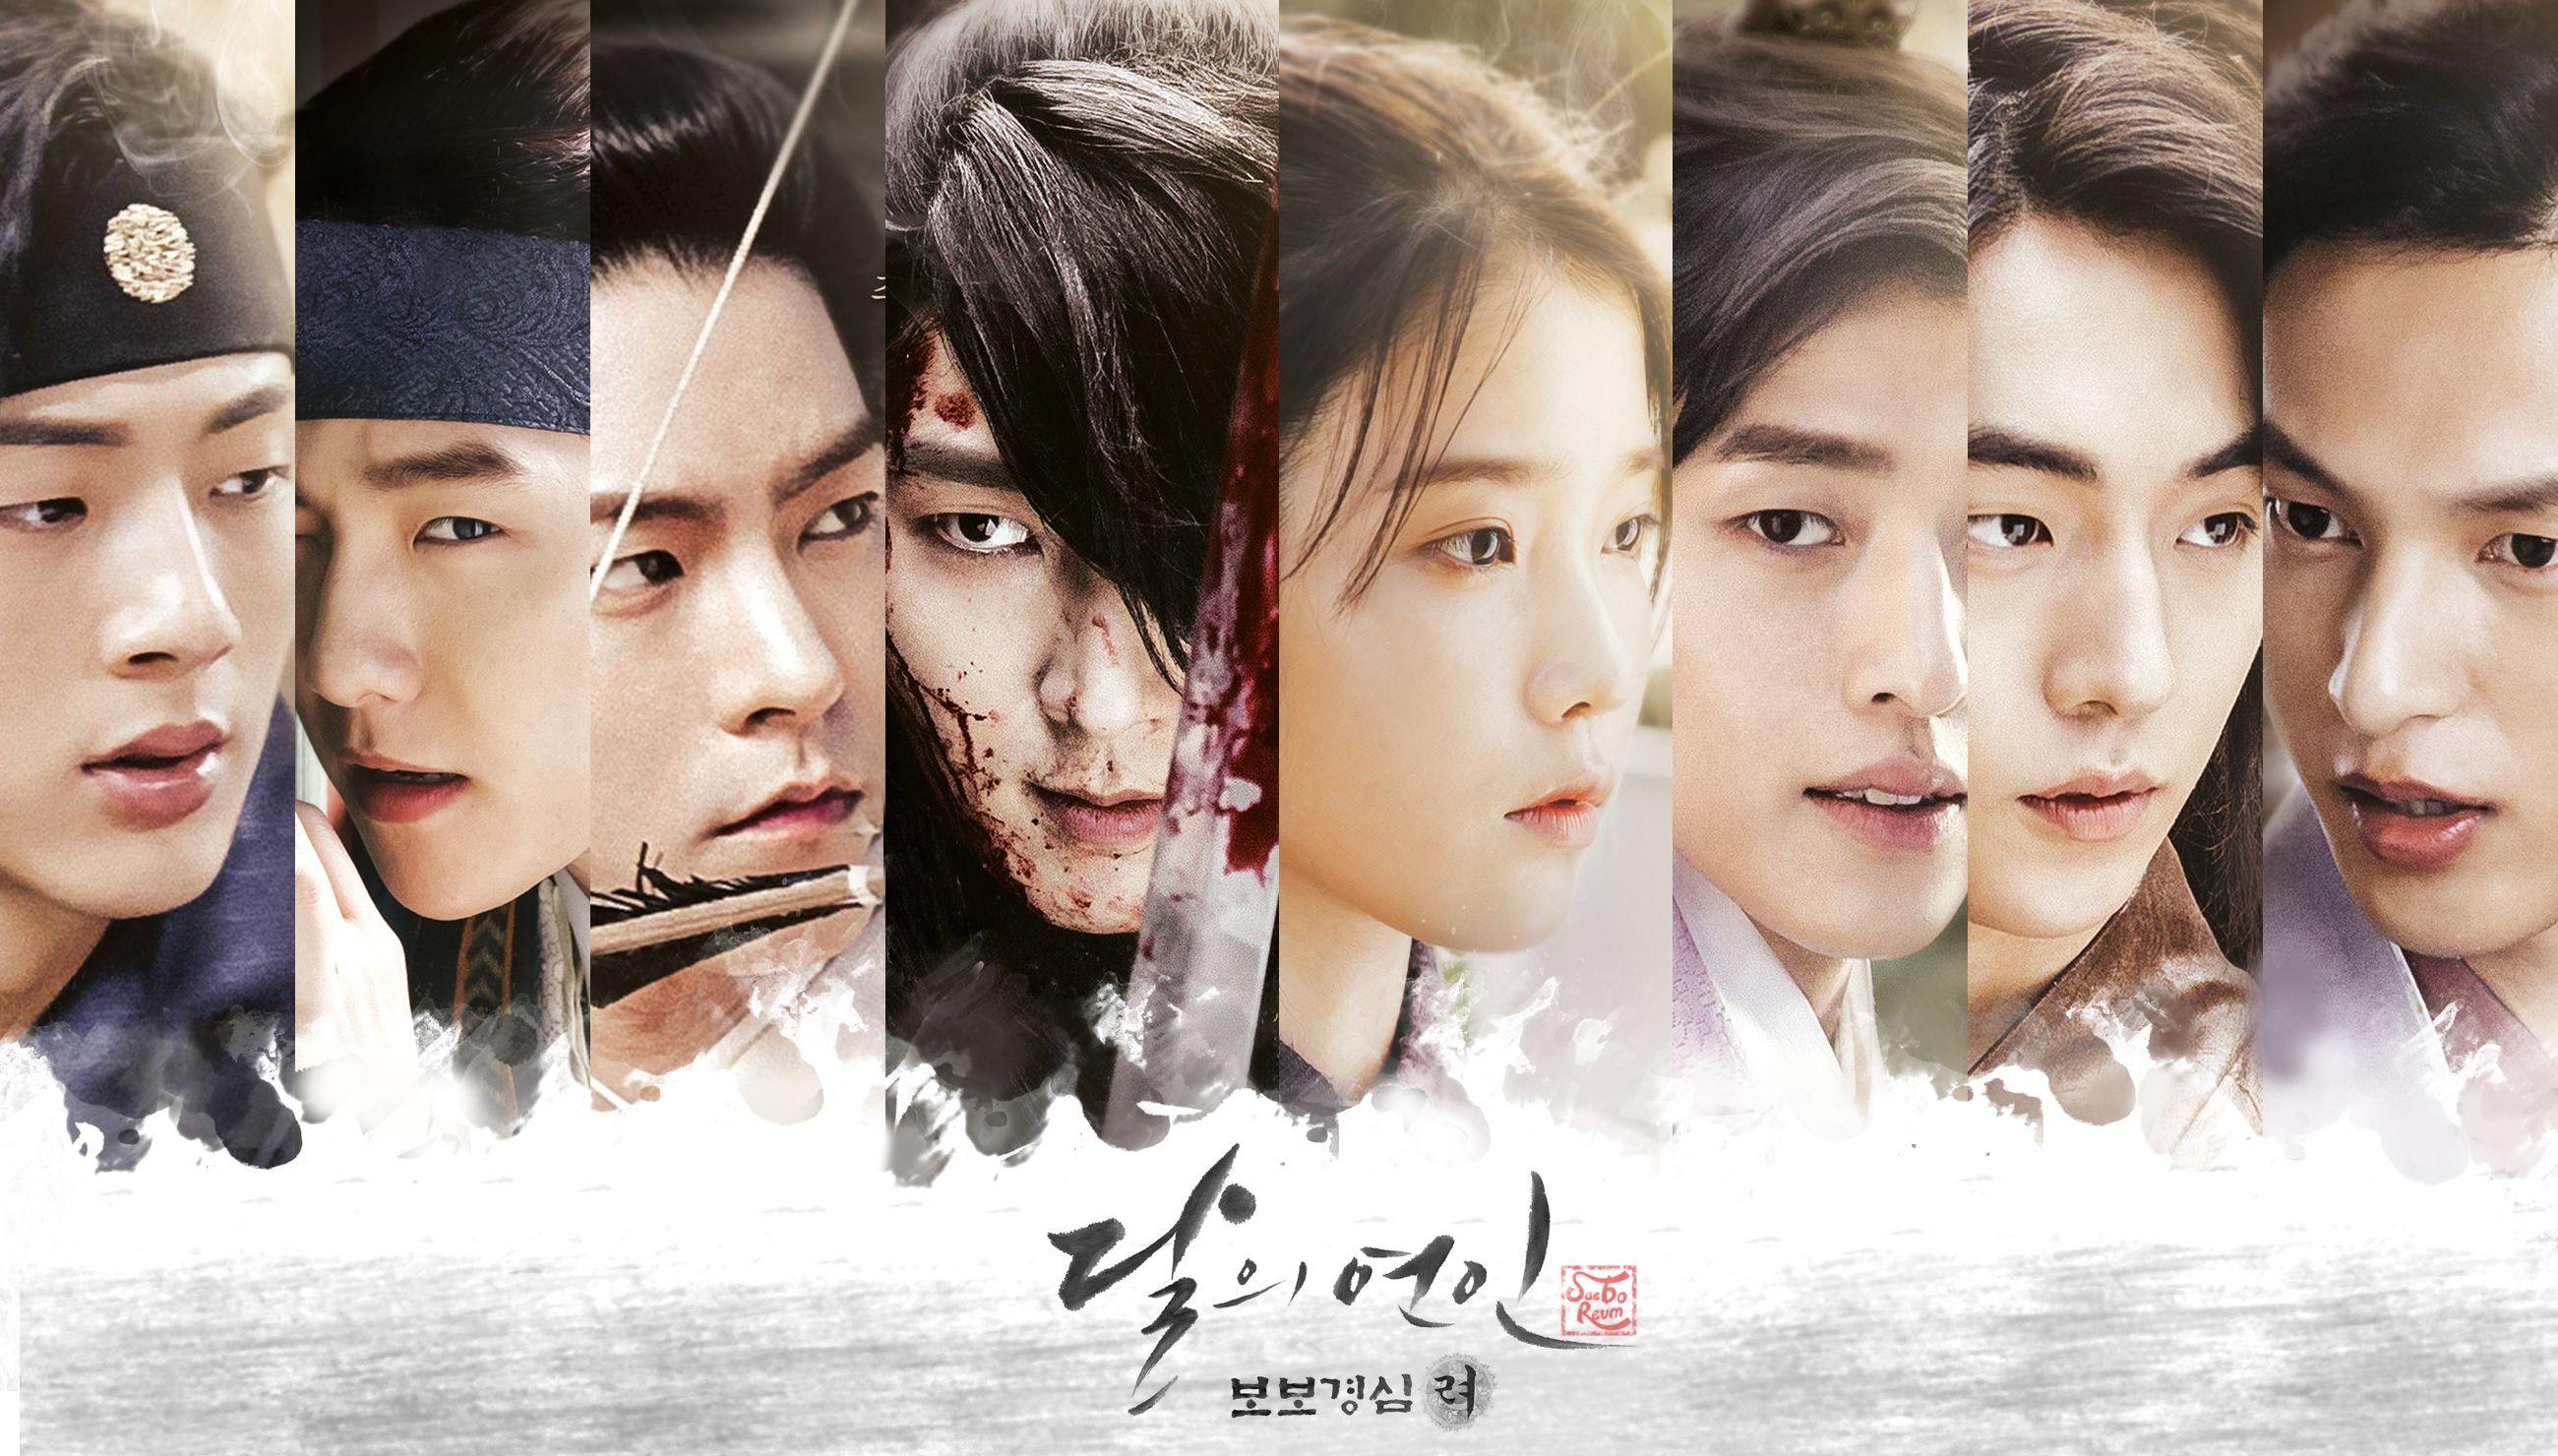 Korean Dramas image Moon Lovers, Scarlet Heart: Ryeo Poster HD